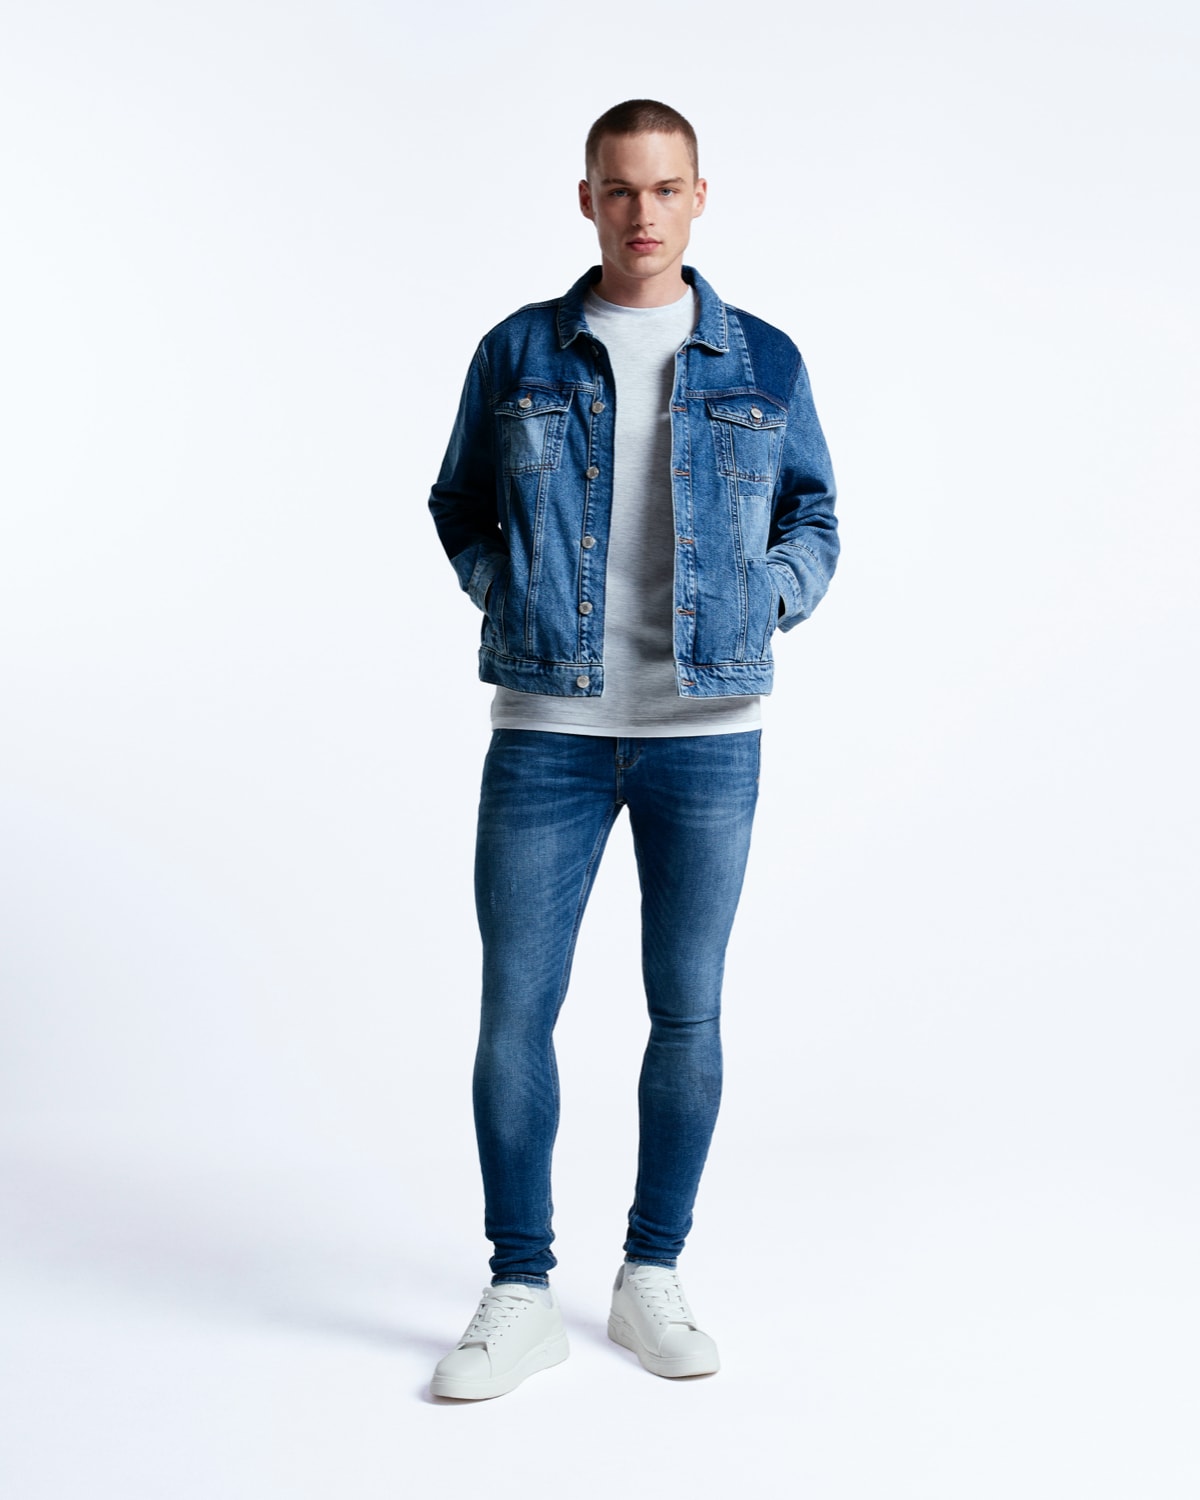 Jeans Outfit Ideas for Men  Macys